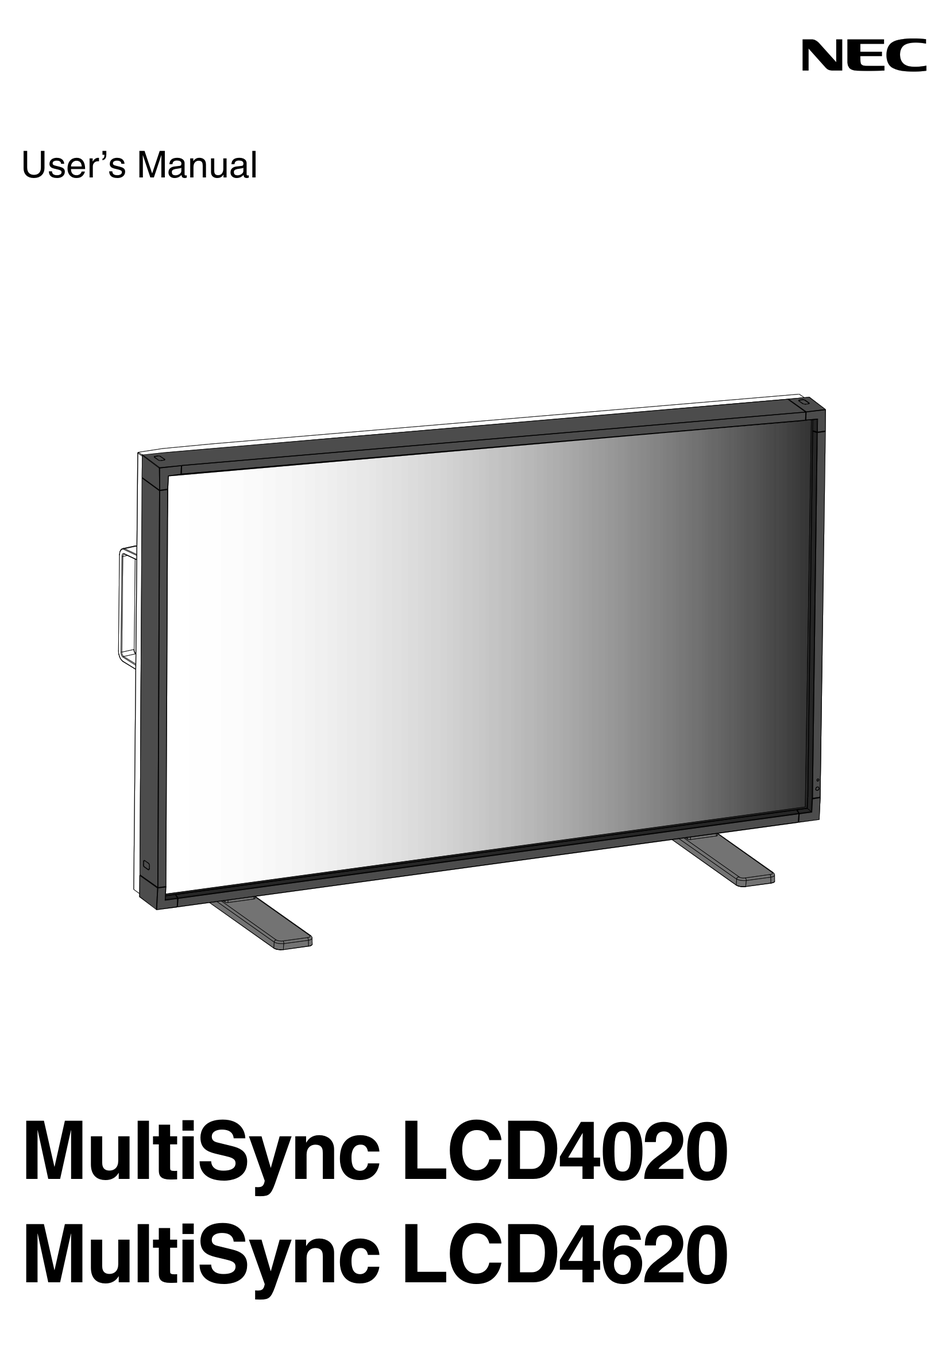 NEC MULTISYNC LCD4020, LCD4620 USER MANUAL Pdf Download | ManualsLib